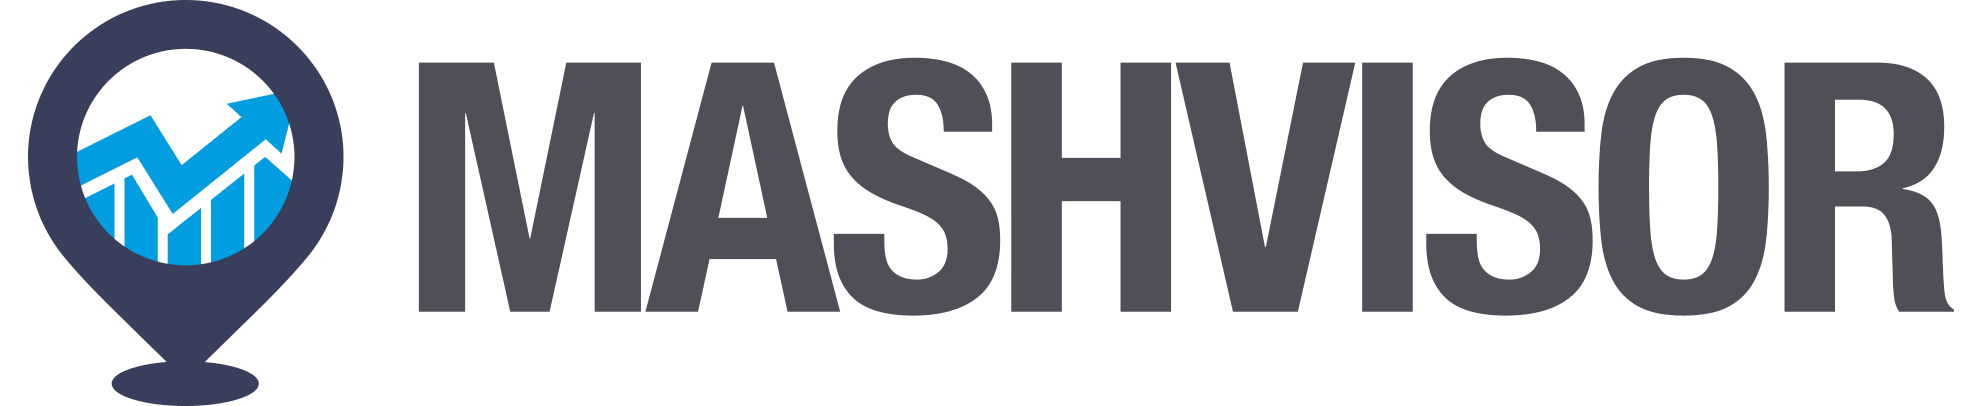 mashvisor-logo.dark